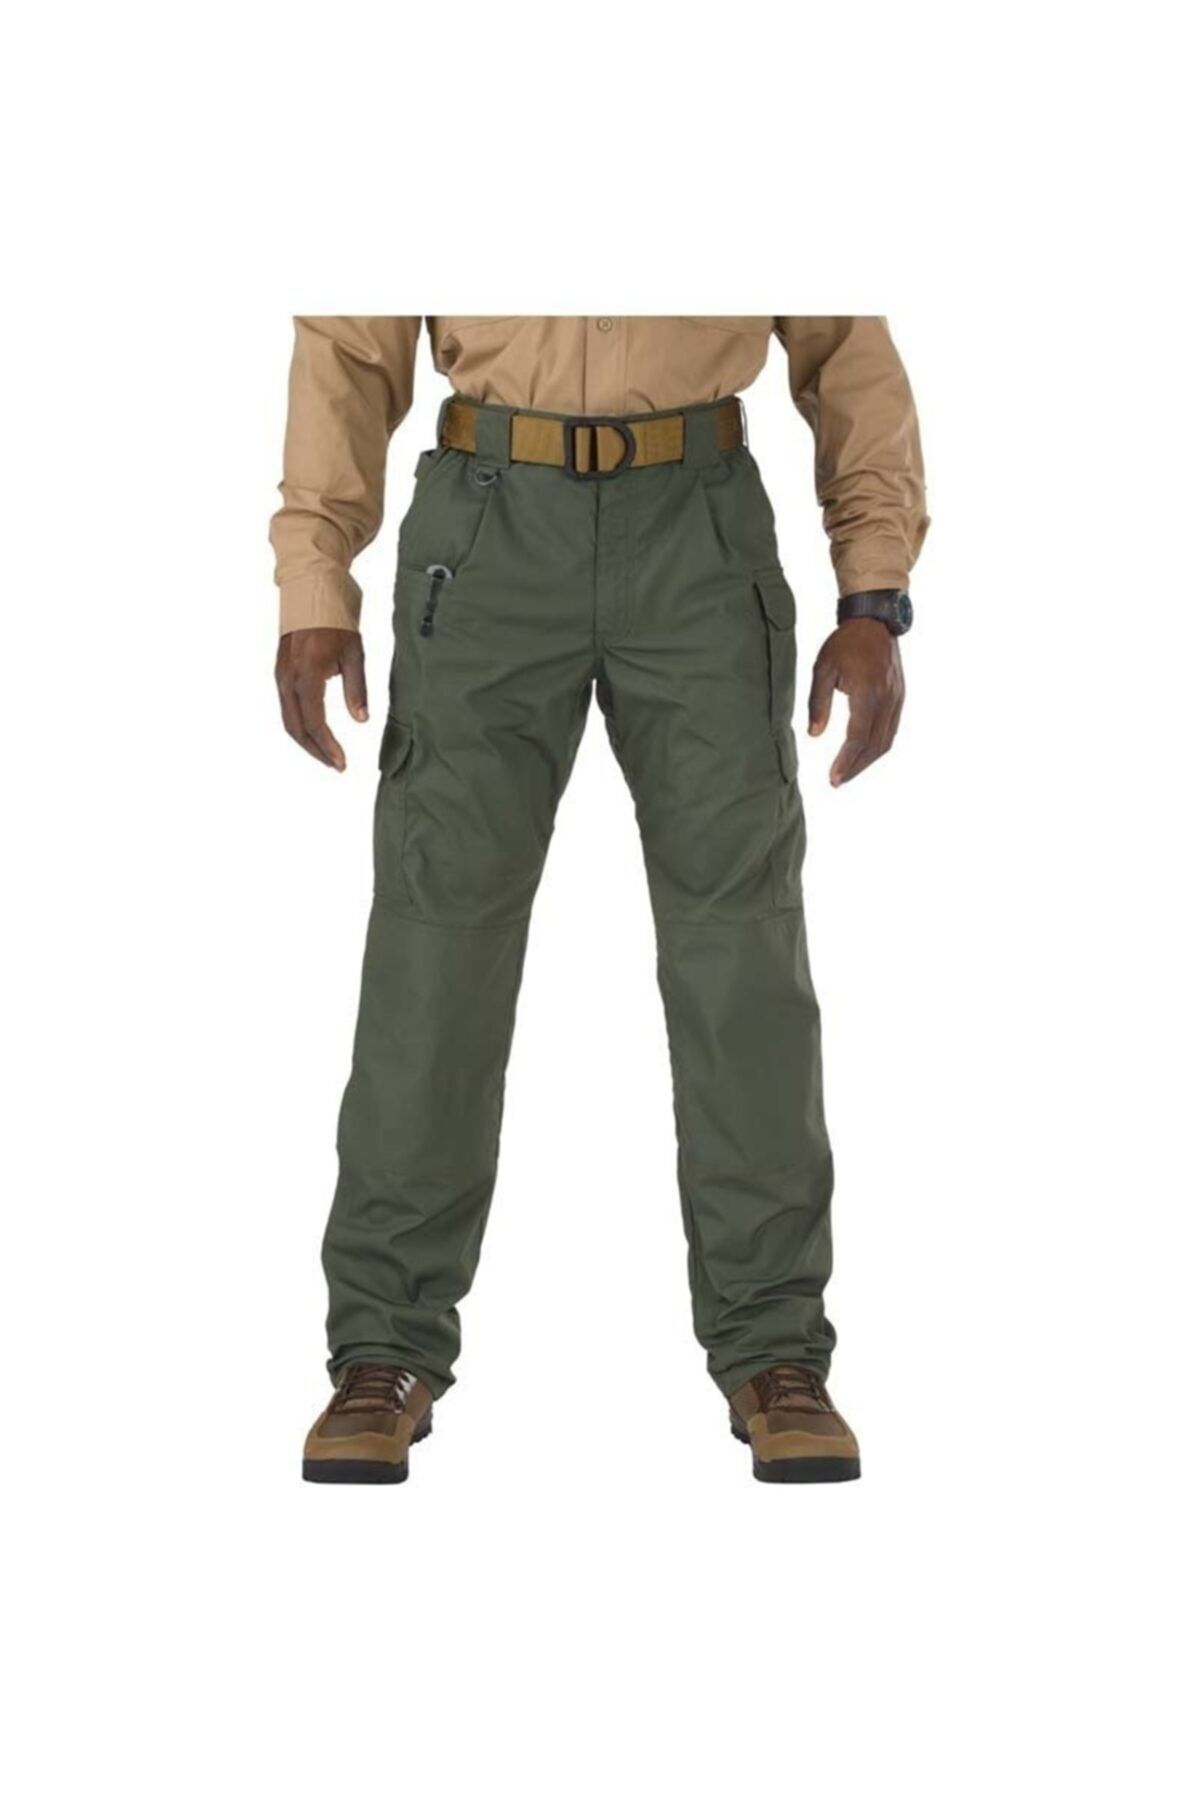 5.11 Tactical Pro Ripstop Tdu Pantolon Yeşil